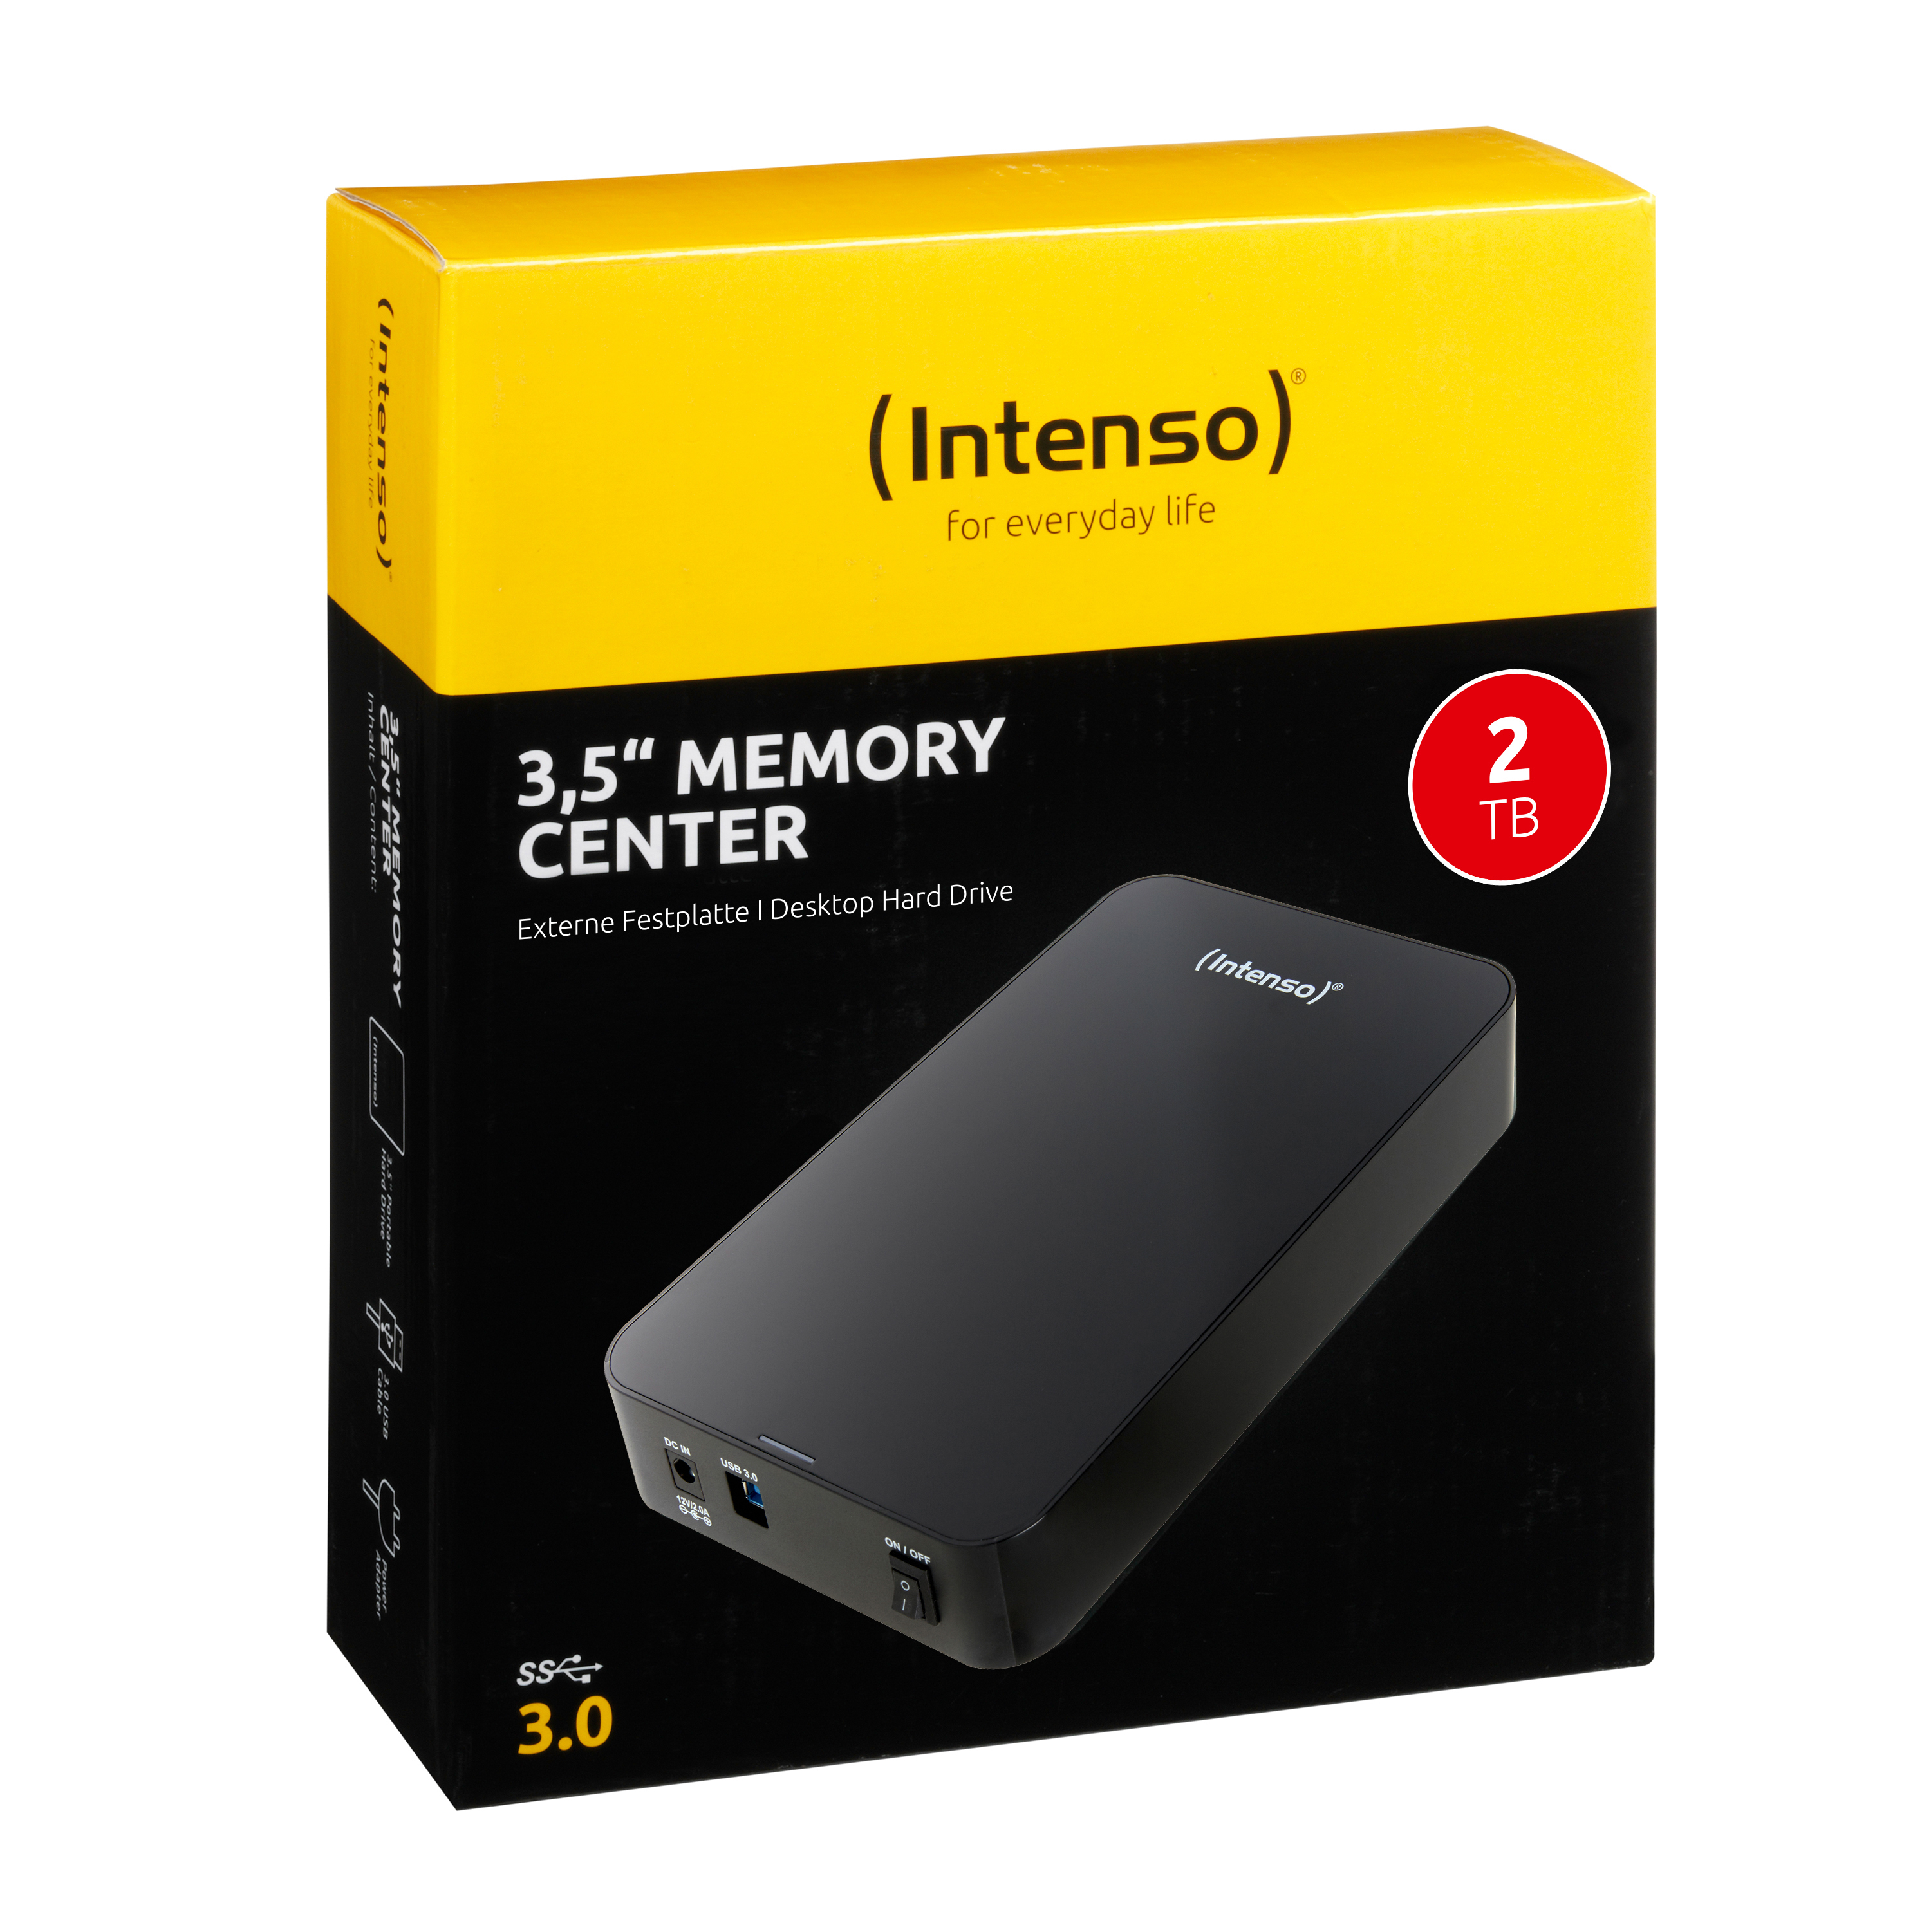 Intenso Memory Center 3.5 (6031580) » Centralpoint